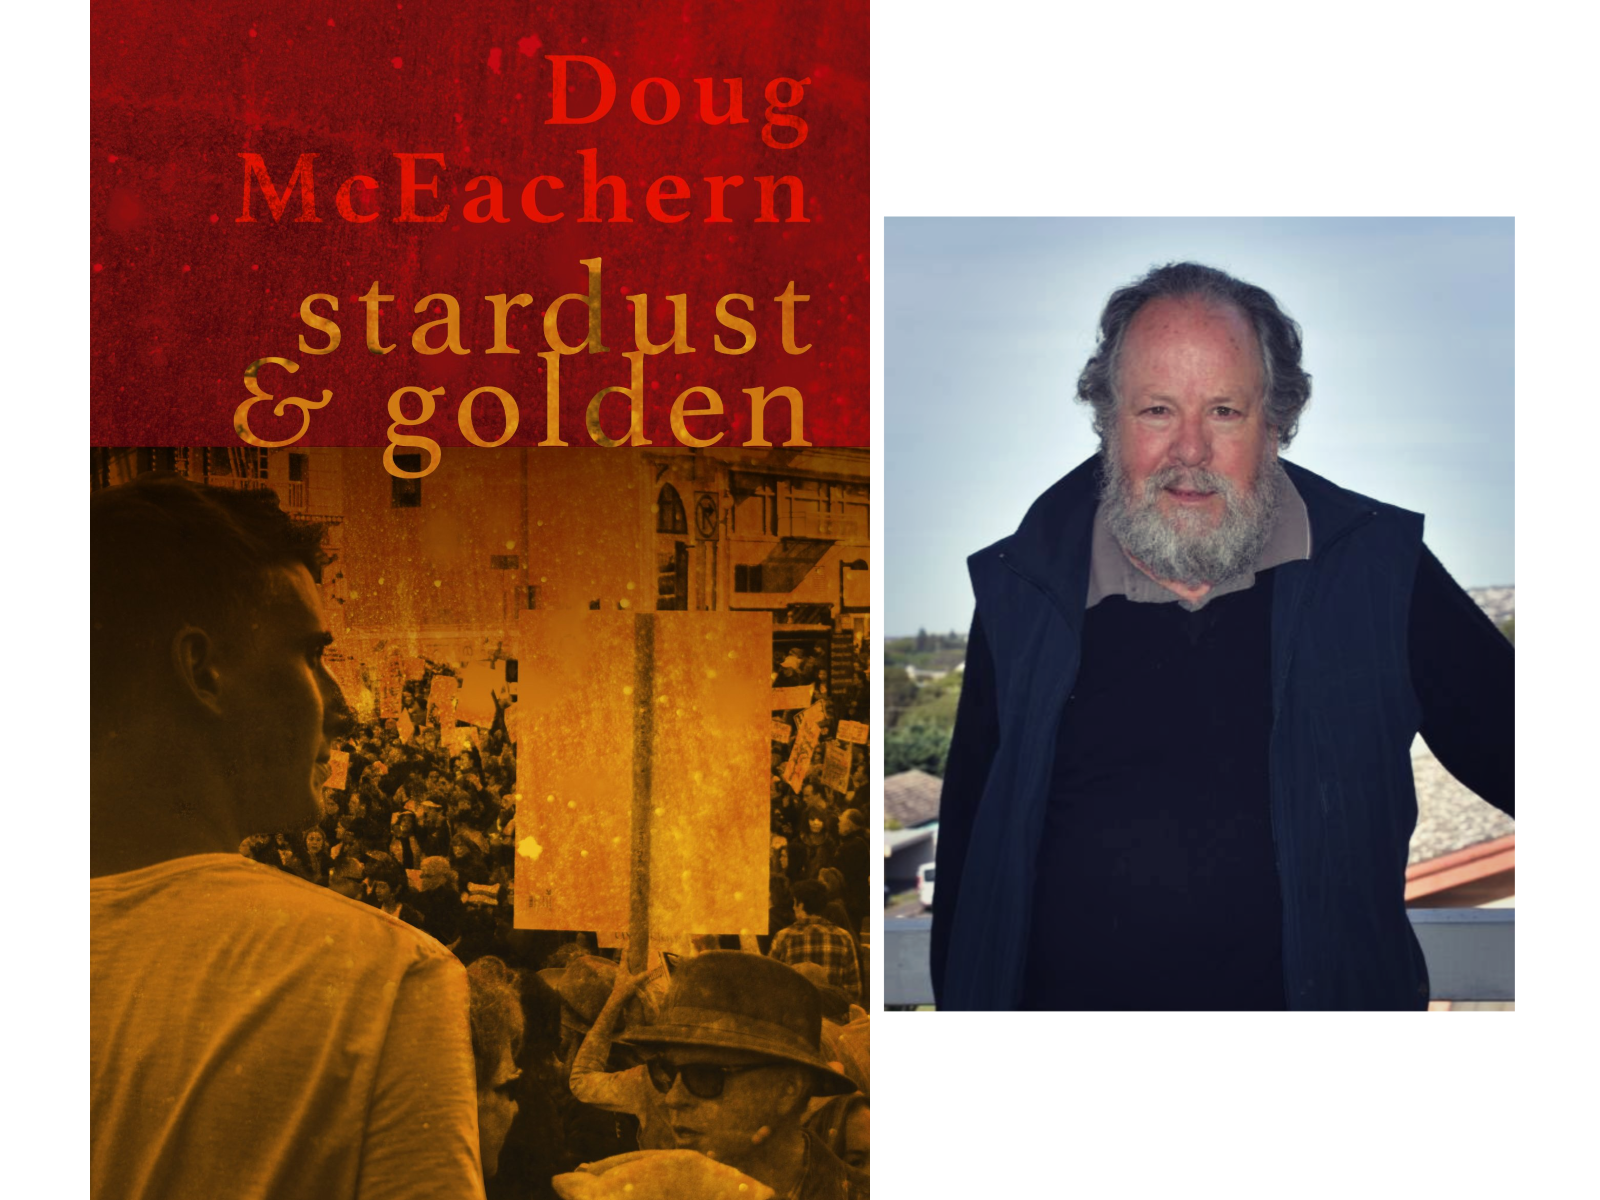 Stardust & Golden cover and author Doug McEachern